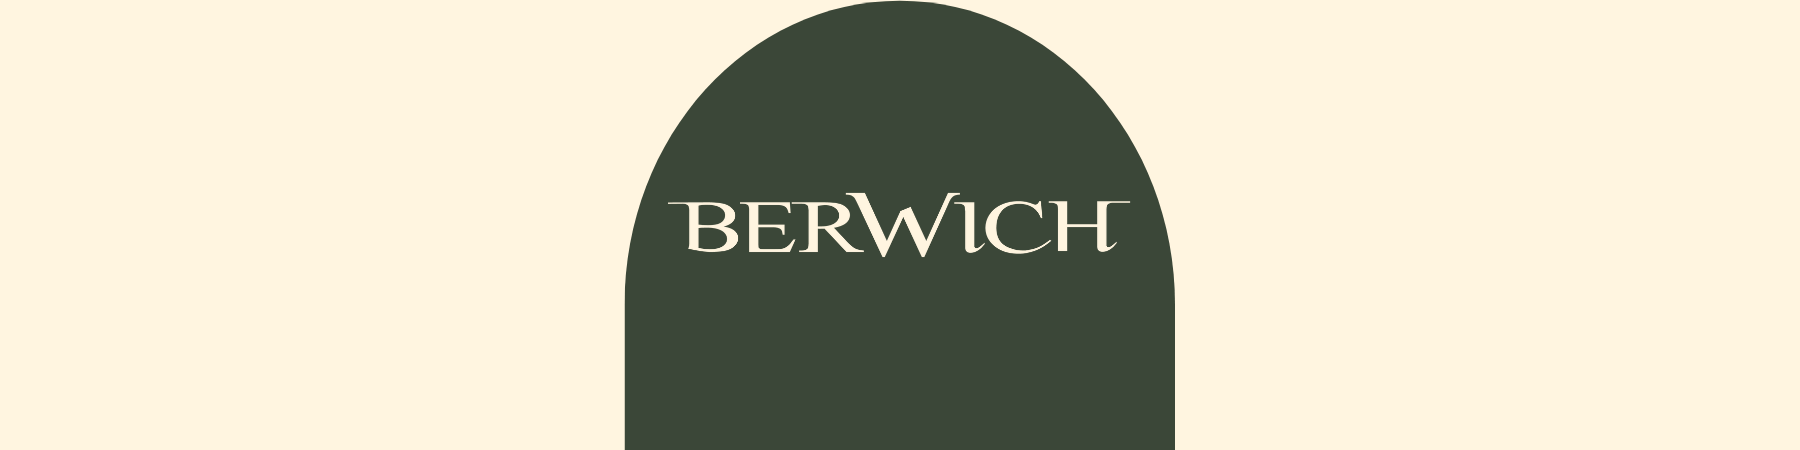 Berwich at the local merchants